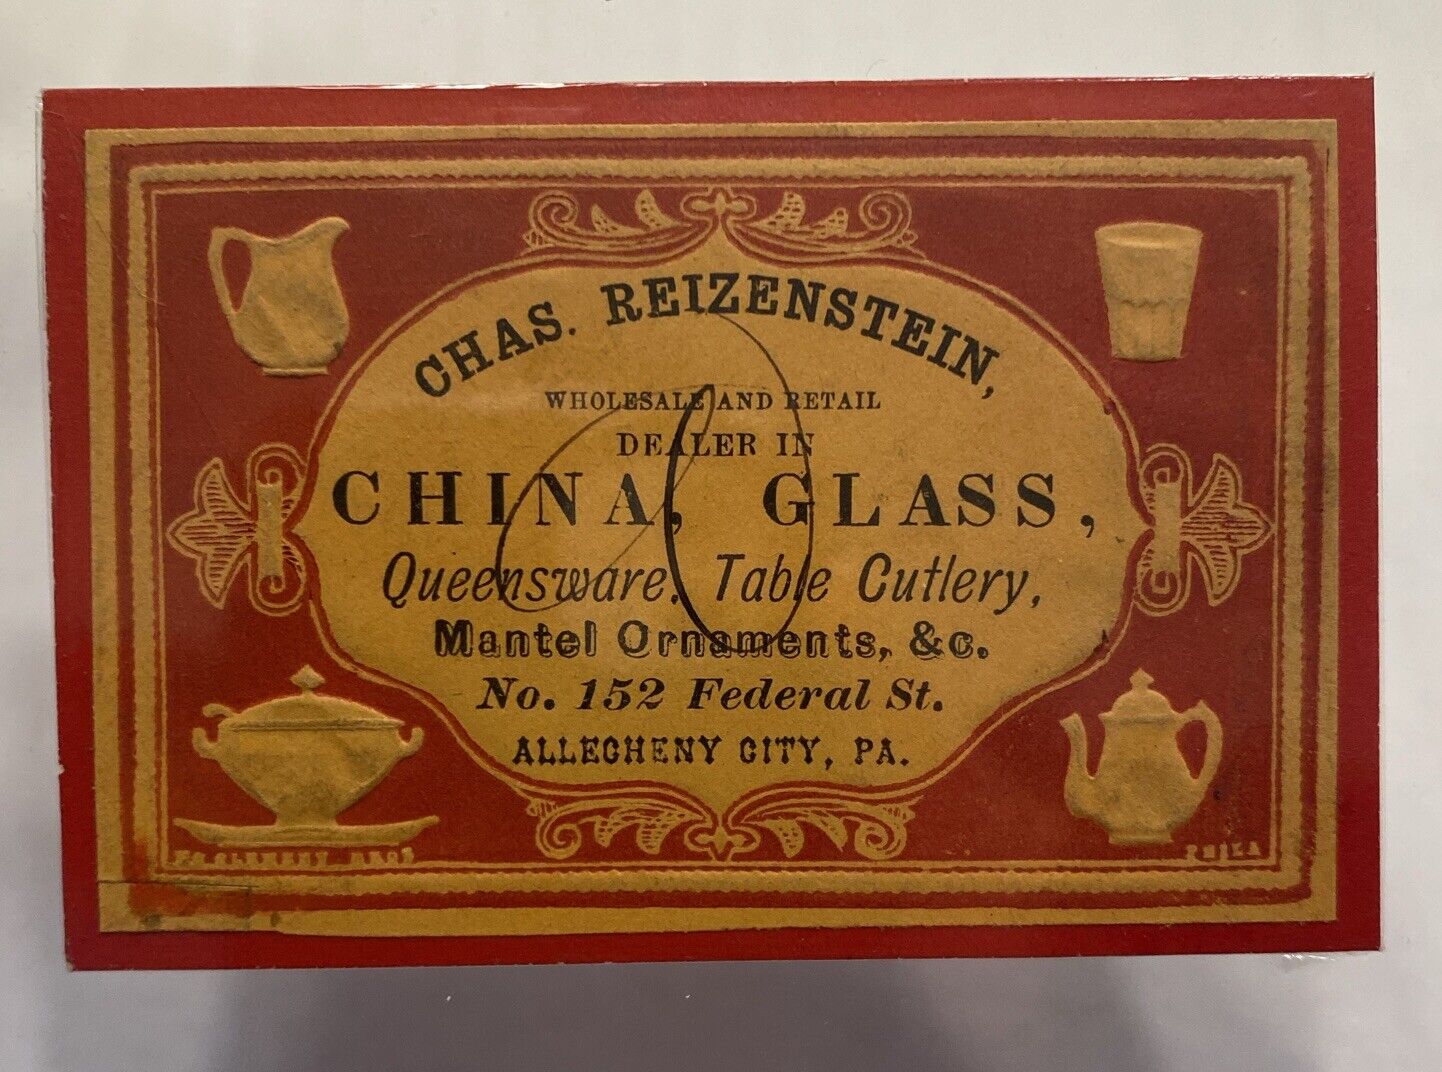 1865 China Glass Wholesale Dealer Advertising Trade Card Charles Reizenstein